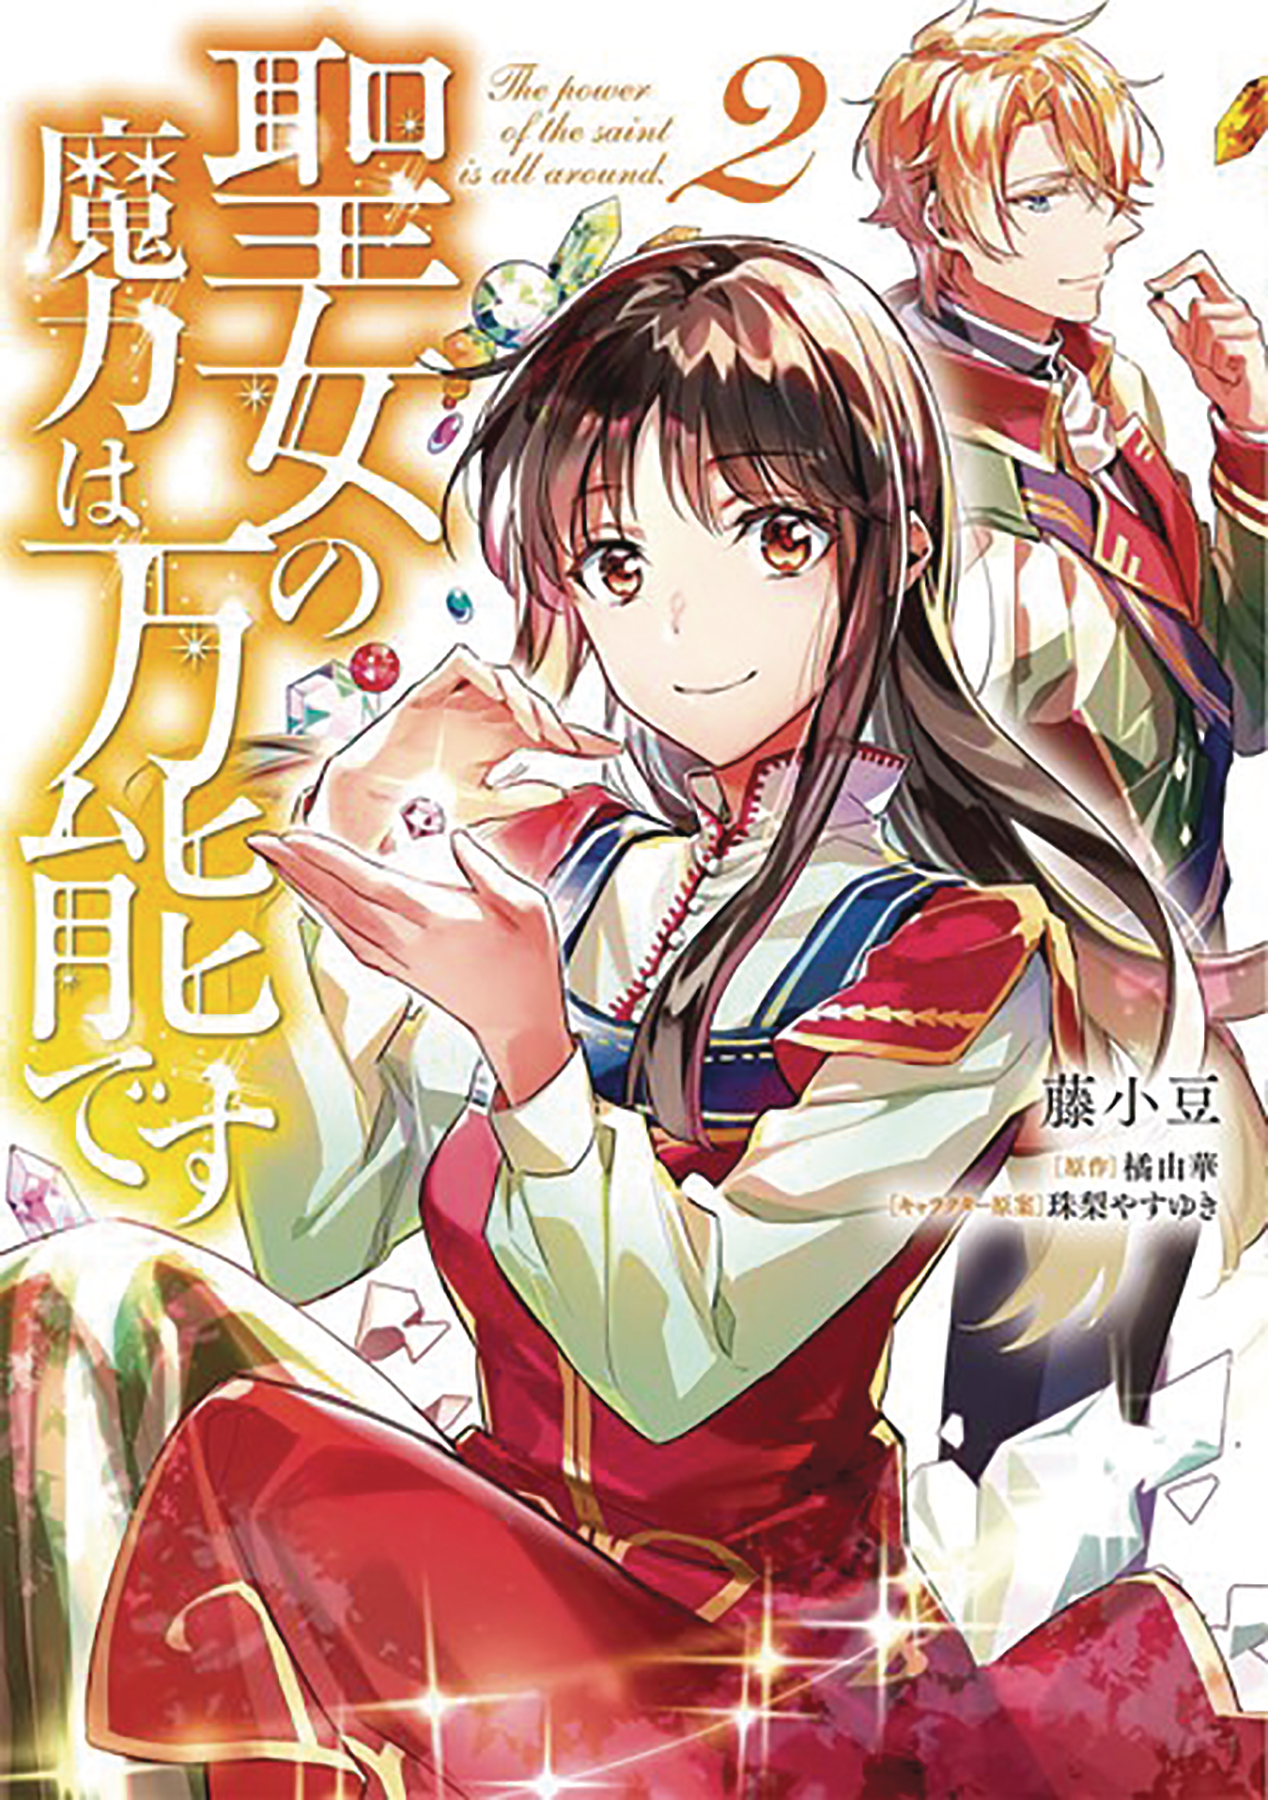 Saint's Magic is Omnipotent Manga Volume 2